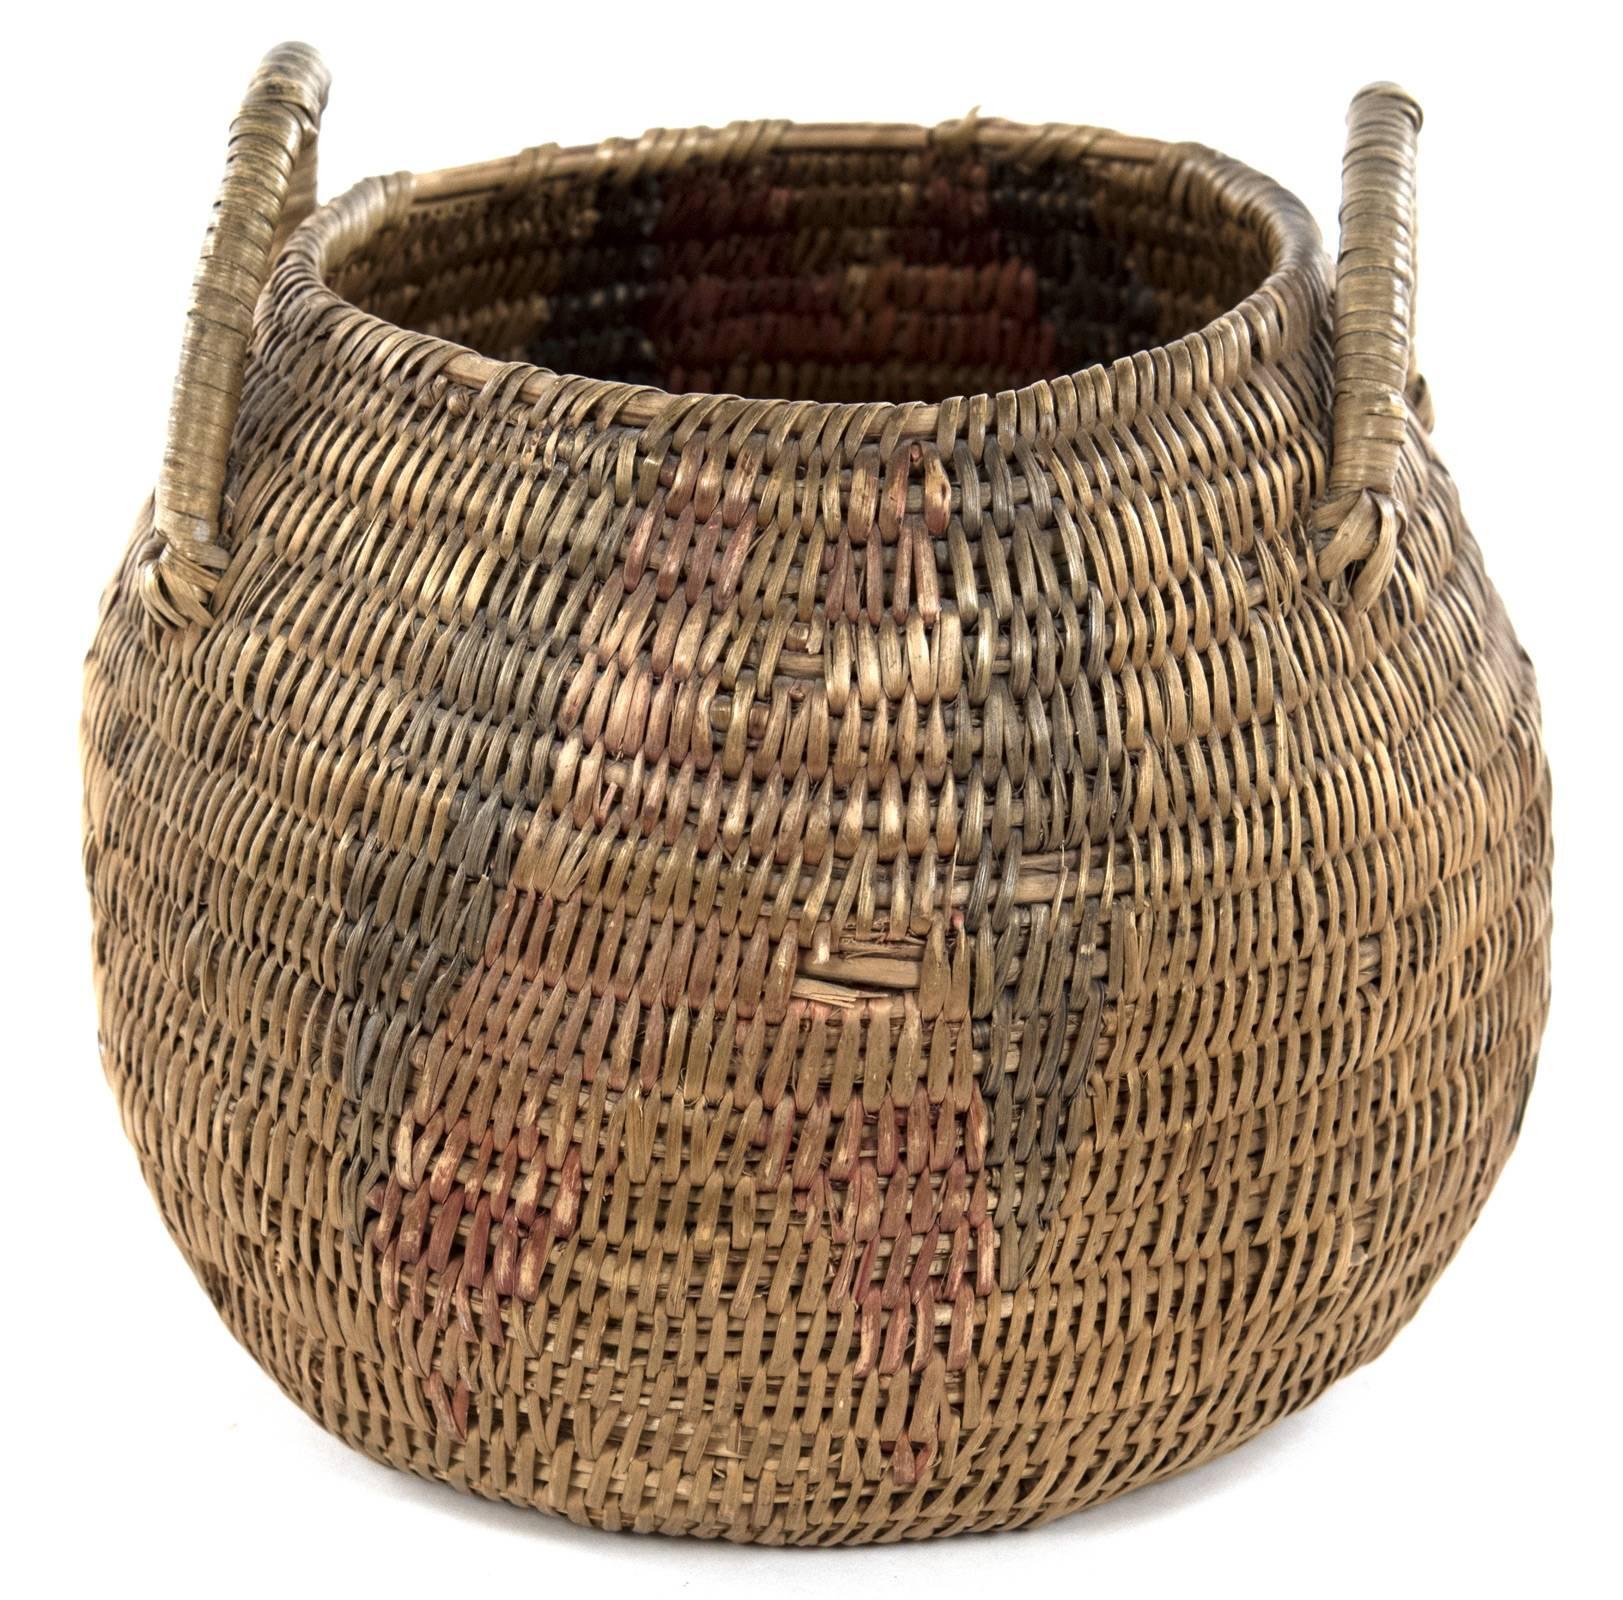 Twined Native American Handled Basket